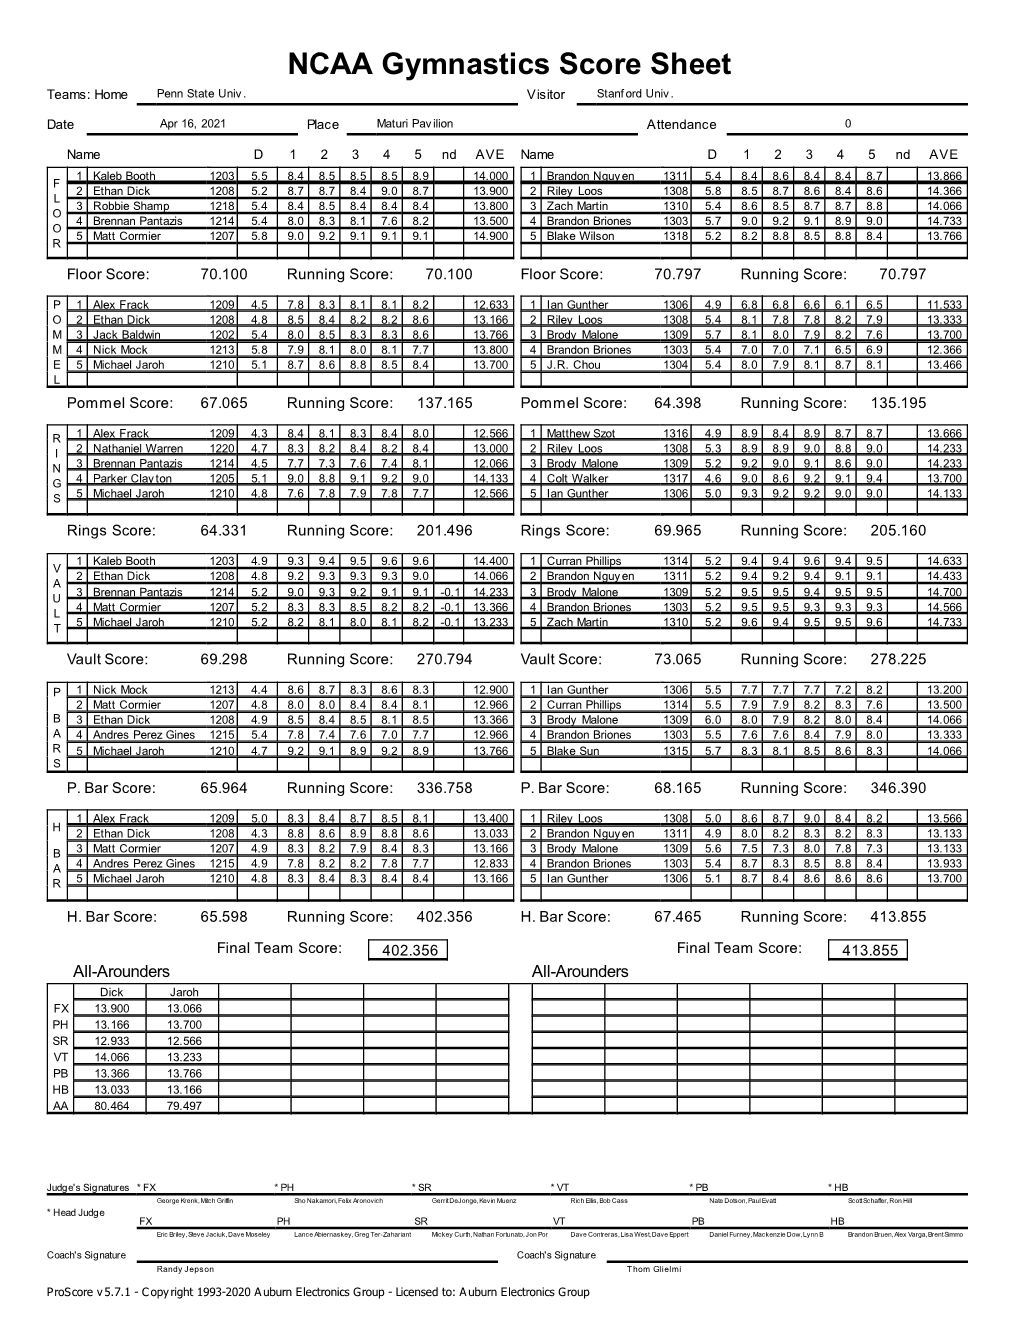 NCAA Gymnastics Score Sheet Teams: Home Penn State Univ